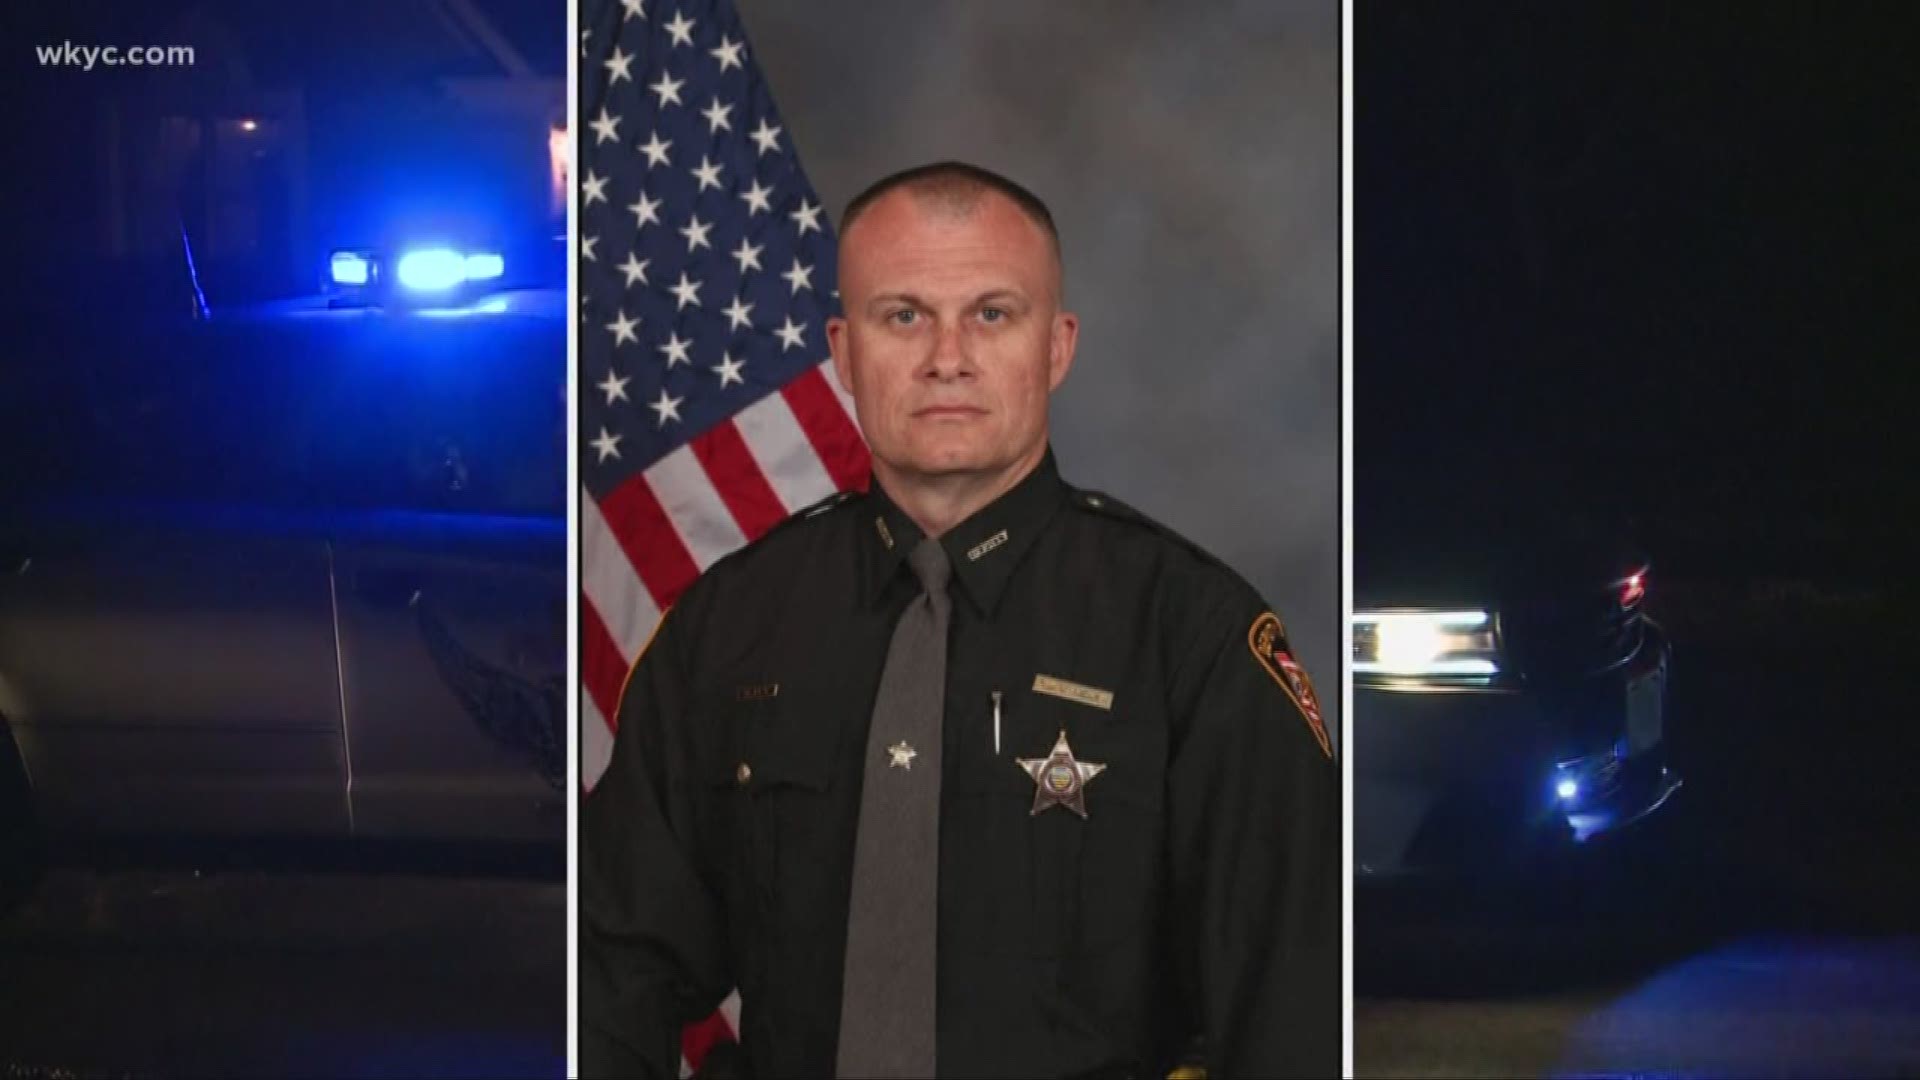 Cincinnati Sheriff's Deputy killed during standoff